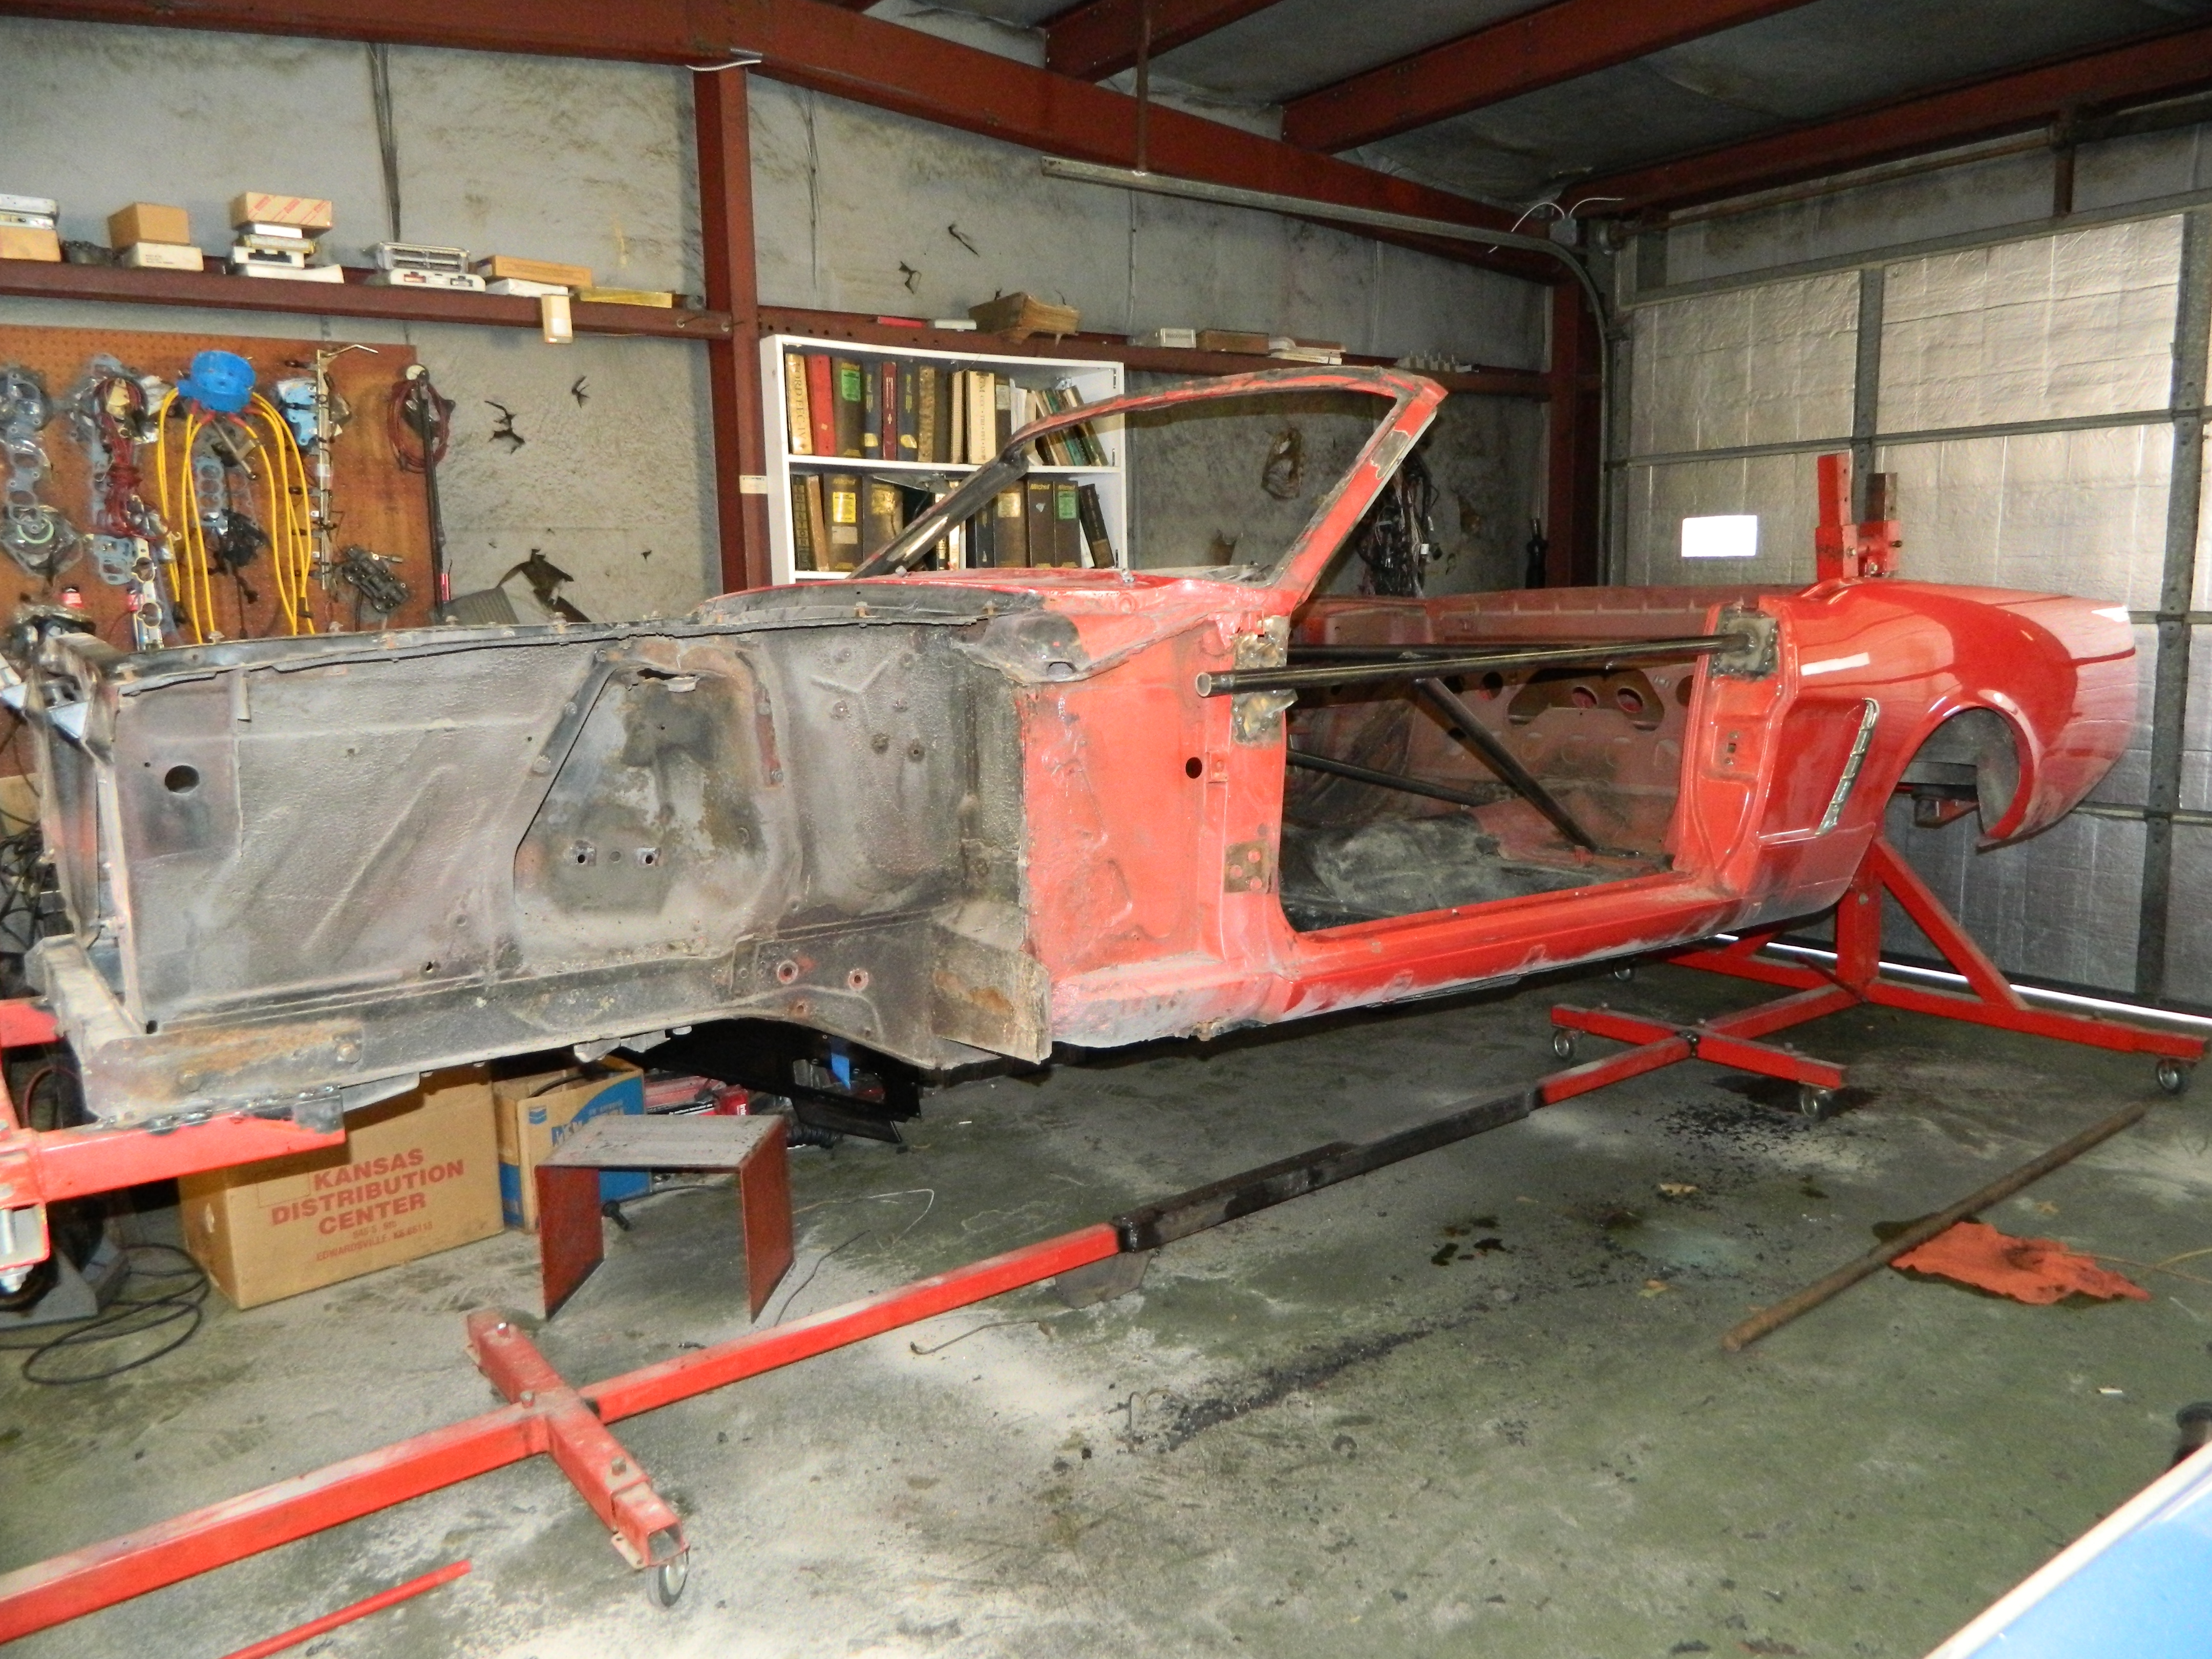 Clark's Auto Clinic 65 Mustang Restoration